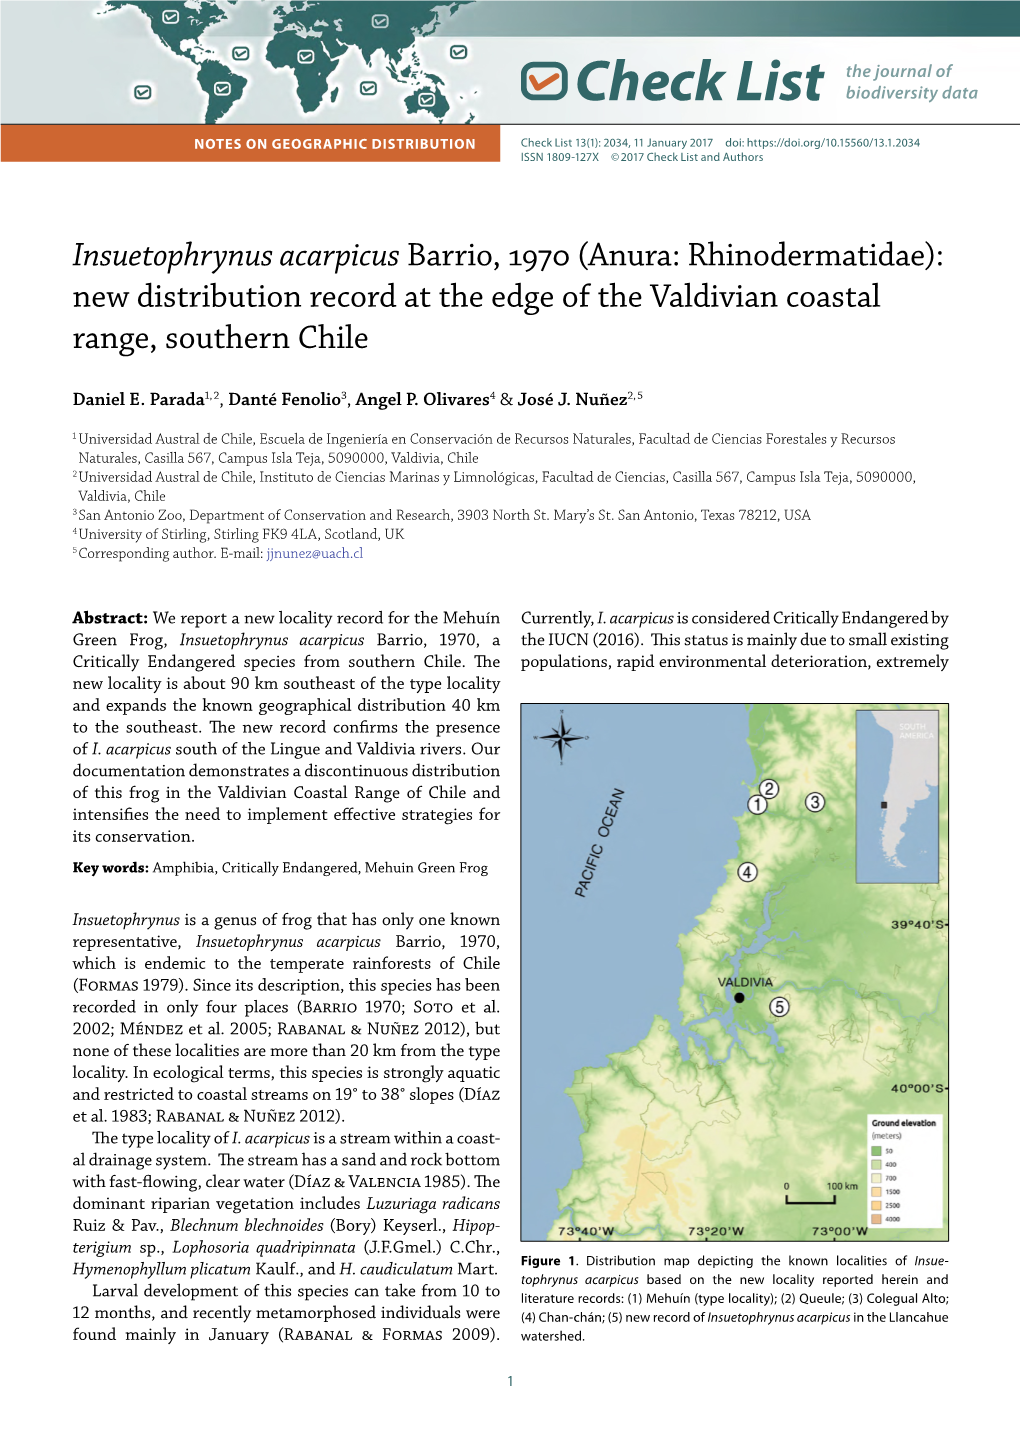 Insuetophrynus Acarpicus Barrio, 1970 (Anura: Rhinodermatidae): New Distribution Record at the Edge of the Valdivian Coastal Range, Southern Chile